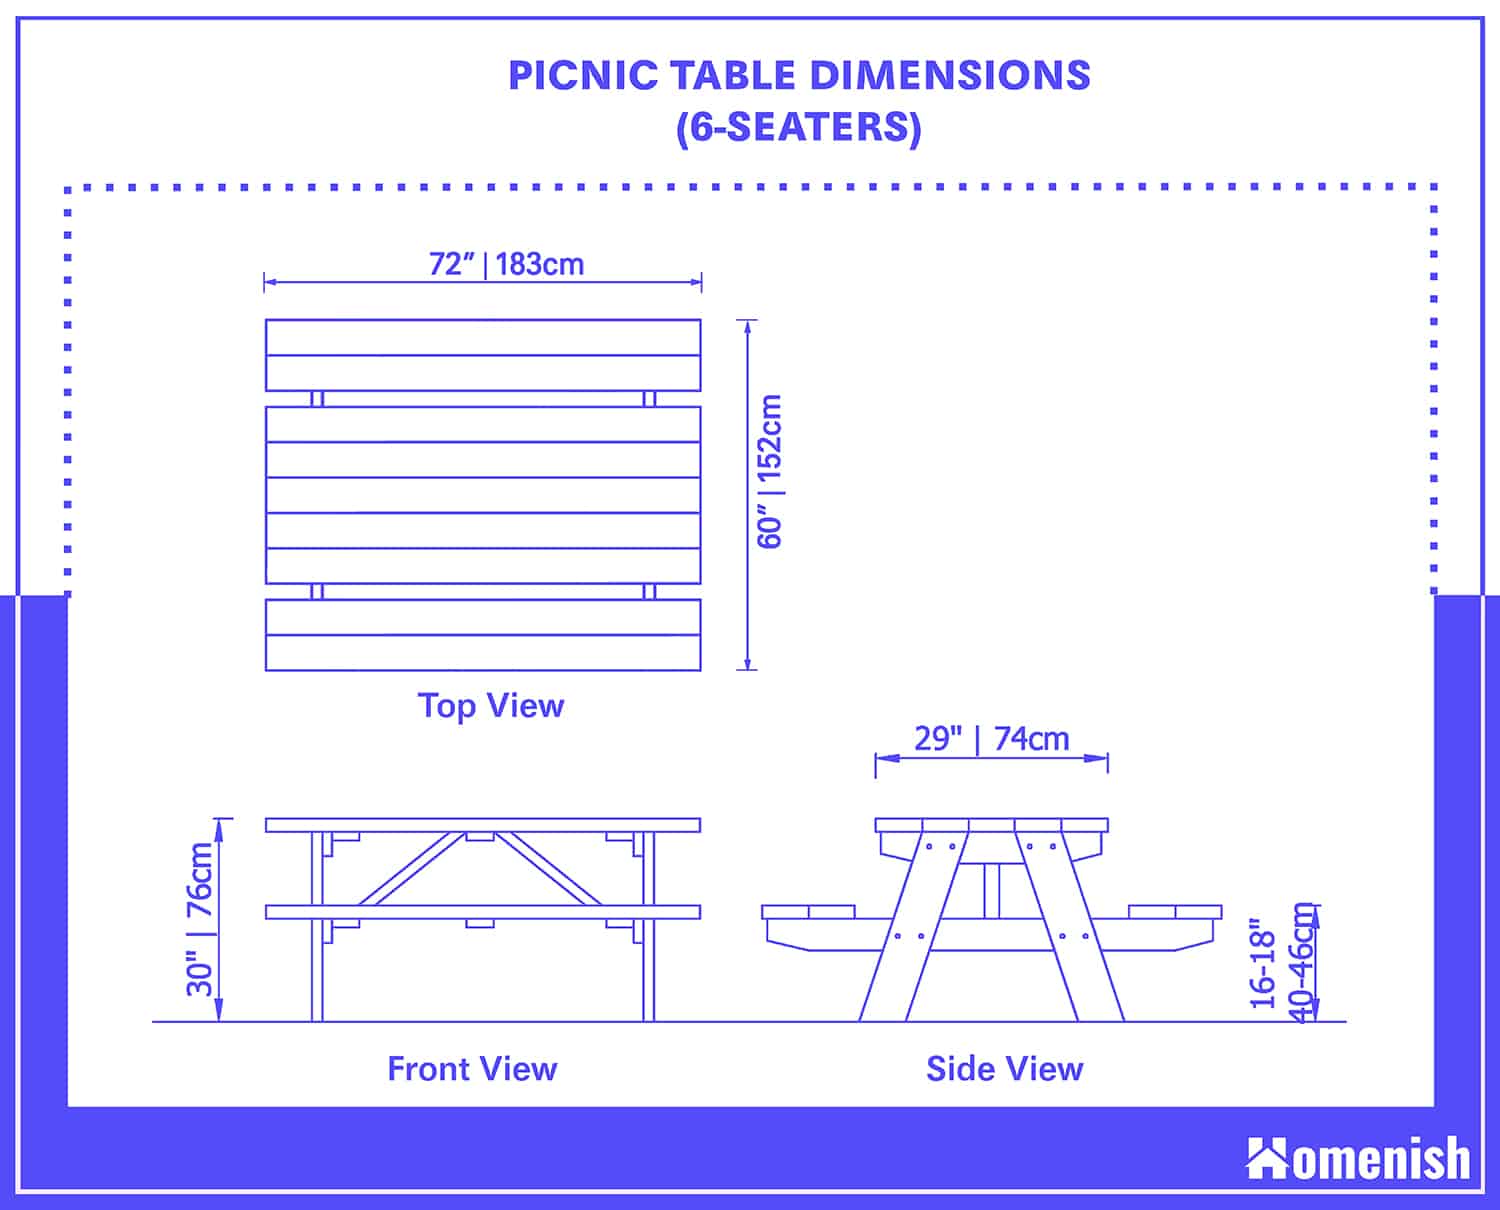 Standard Picnic Table Dimensions - 6 Seats